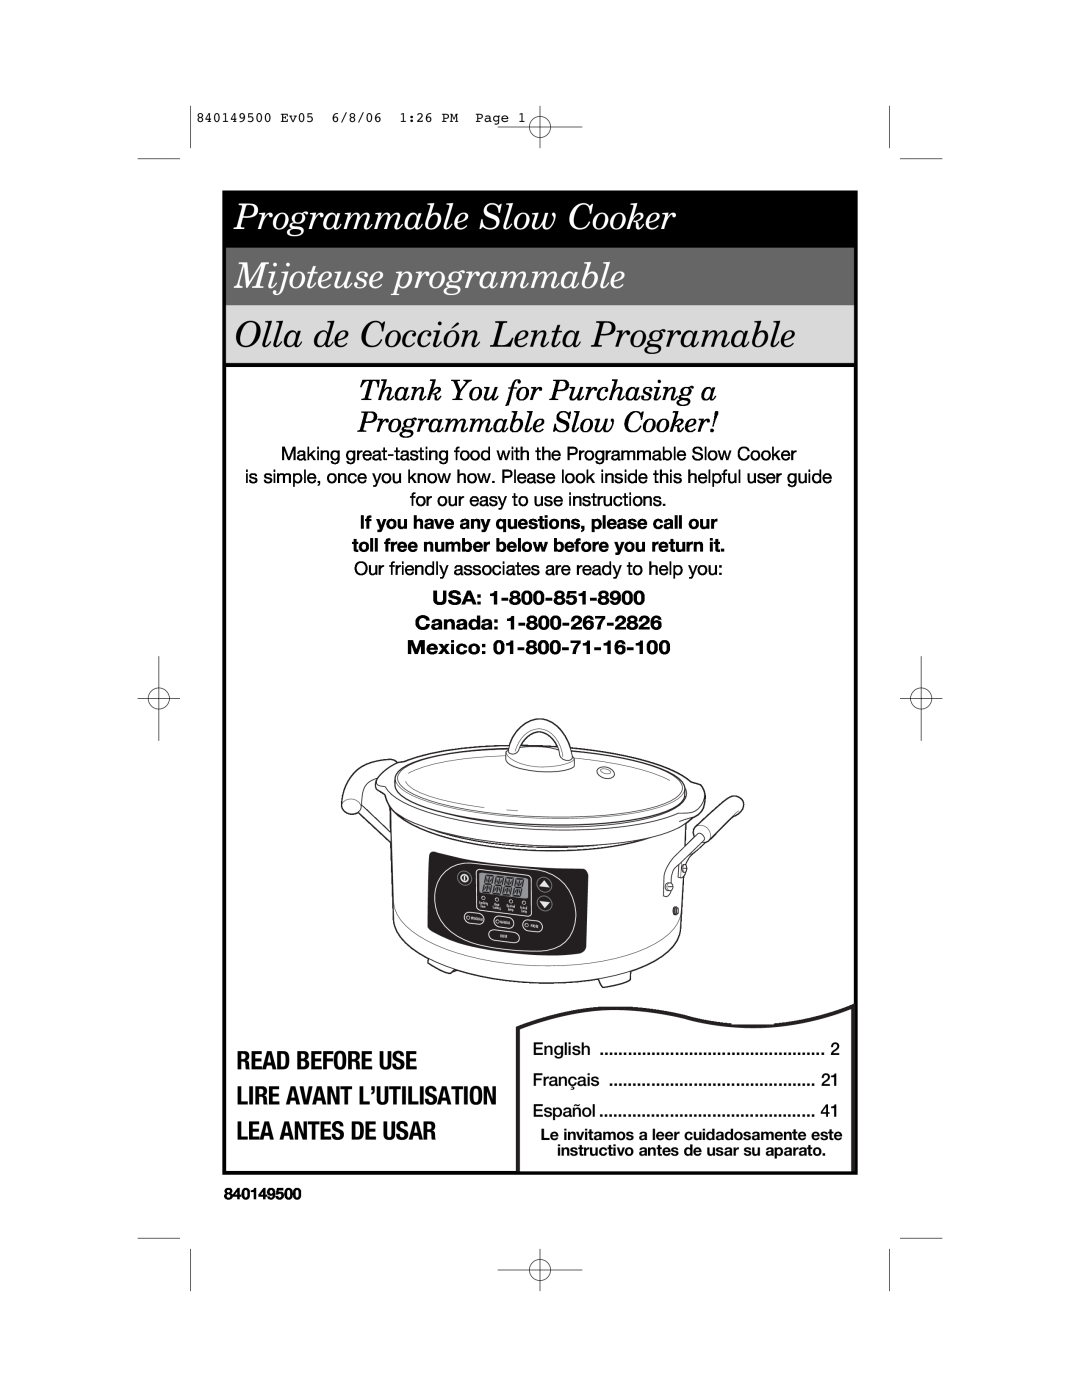 Proctor-Silex 840149500 manual Read Before Use, USA Canada Mexico, Lire Avant L’Utilisation Lea Antes De Usar, English 